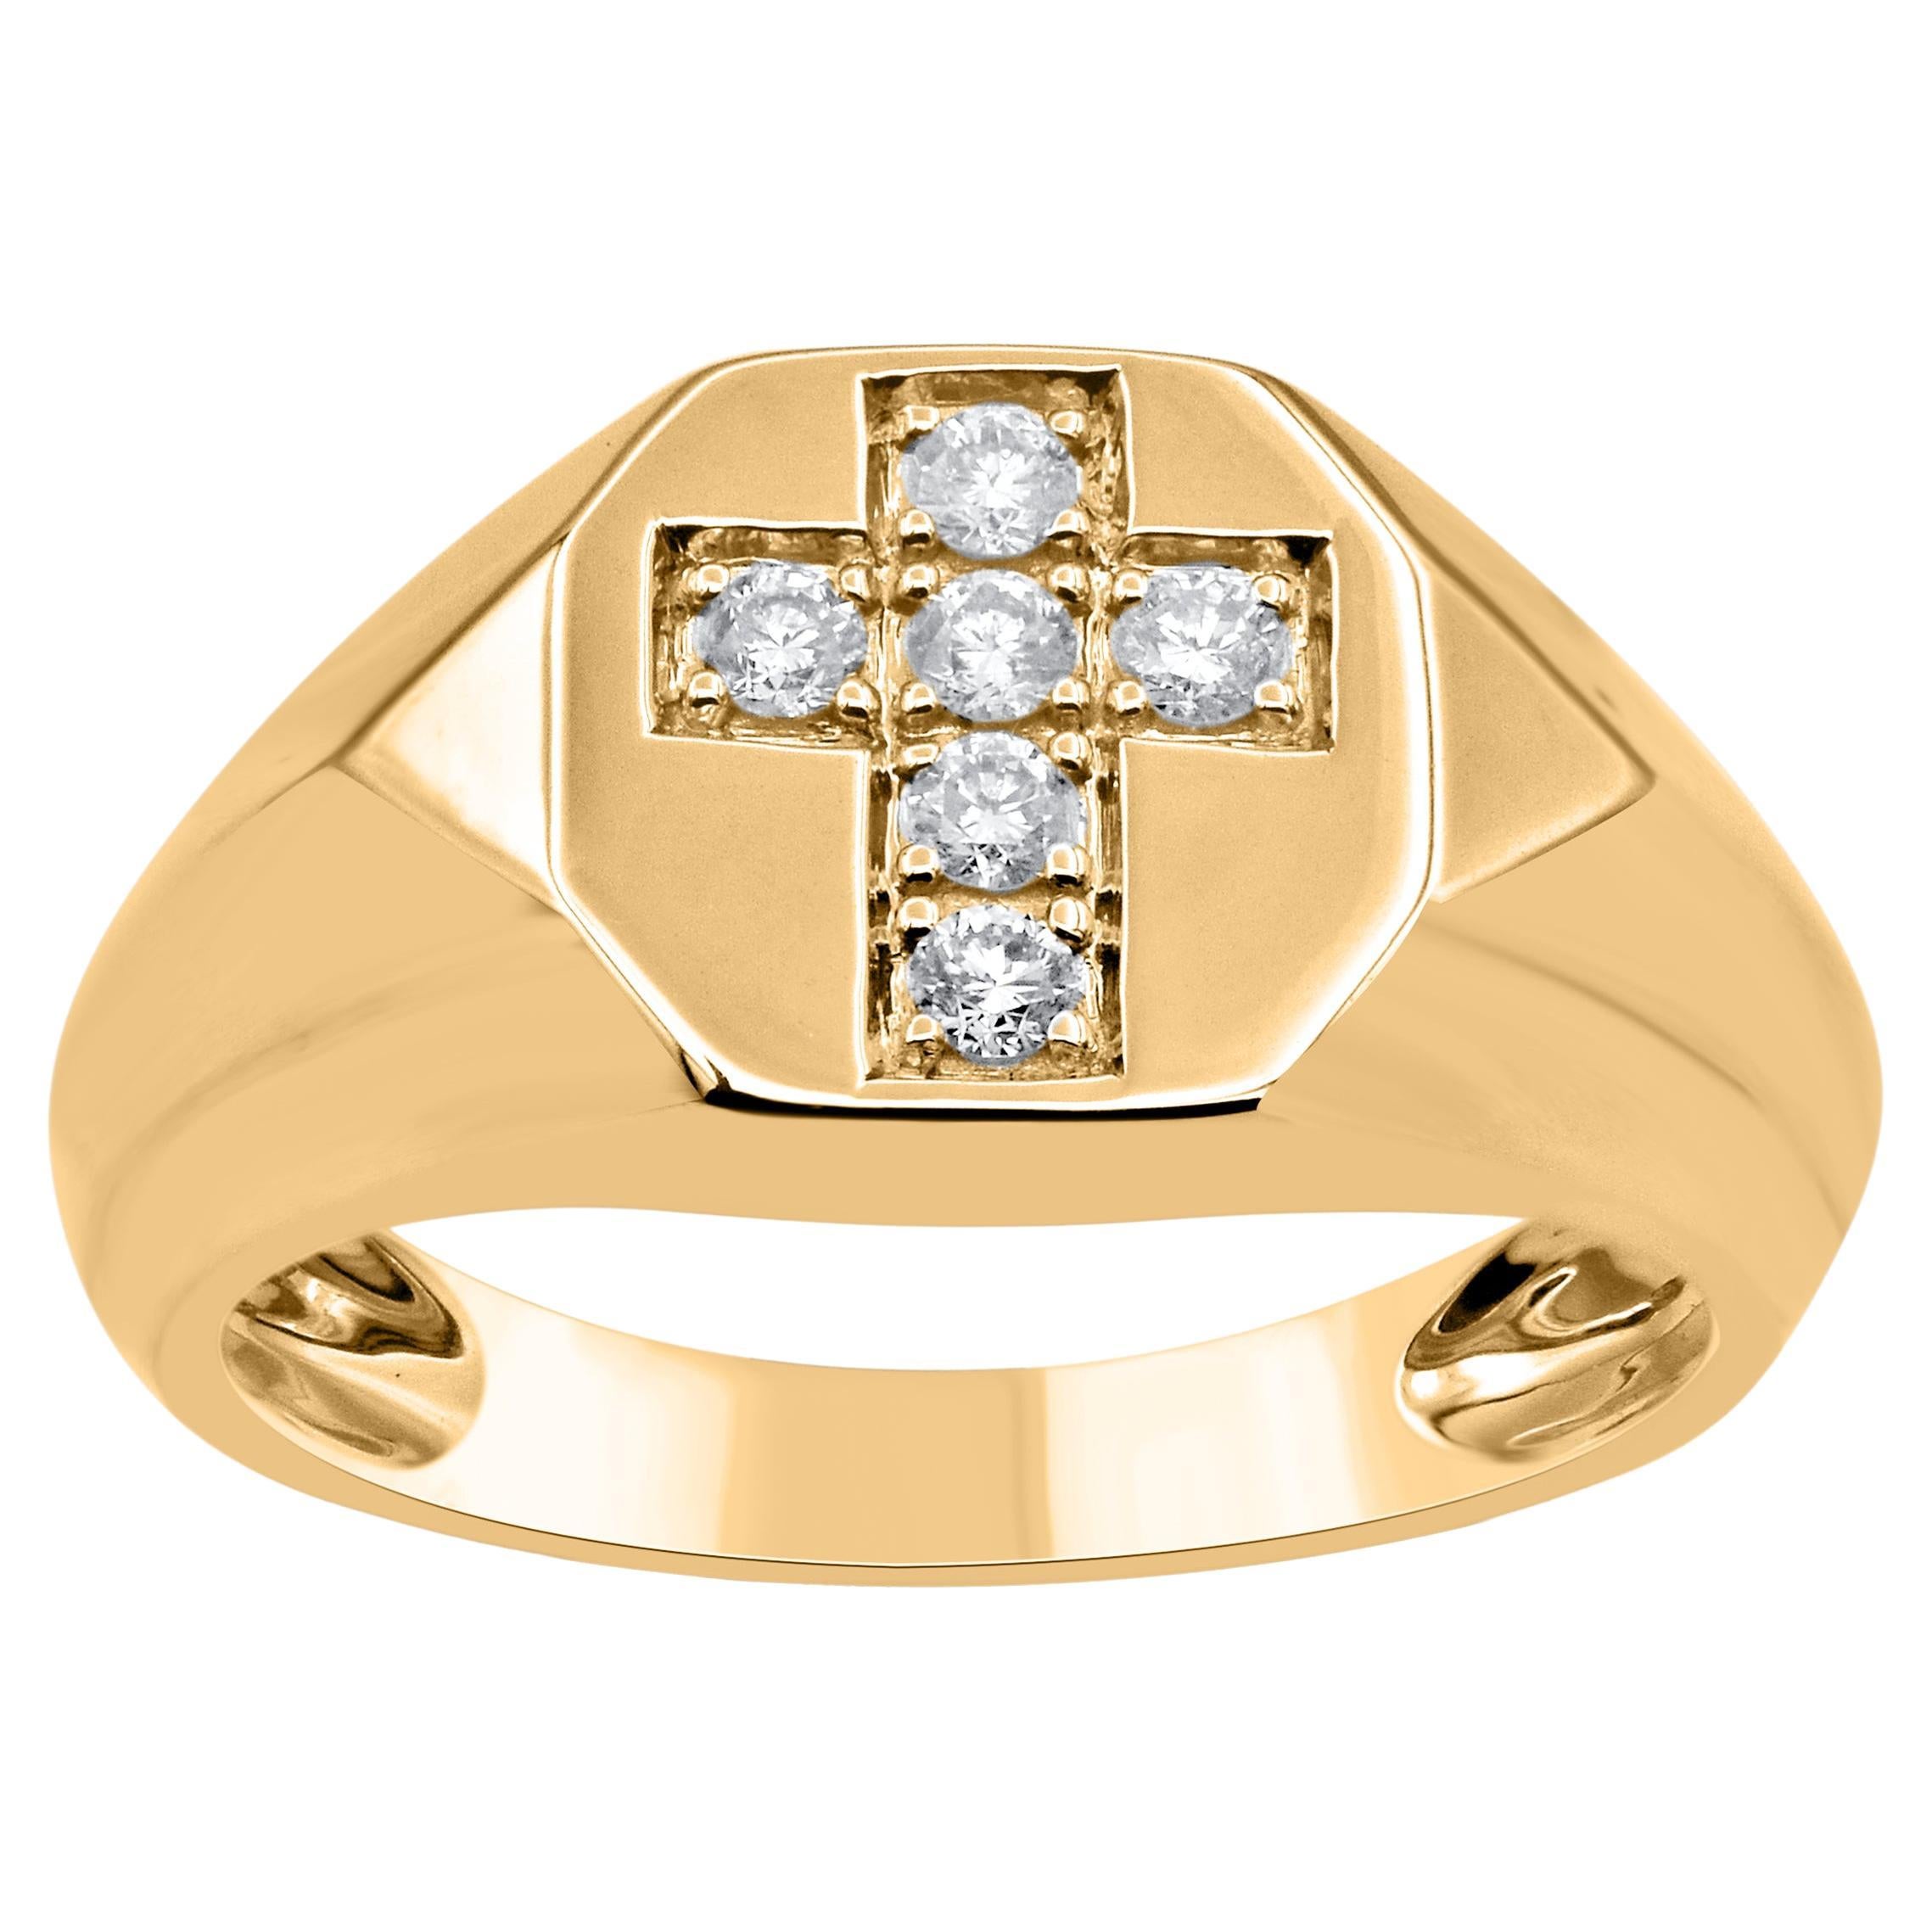 TJD 0.25 Carat Brilliant Cut Natural Diamond 14KT Yellow Gold Men's Cross Ring